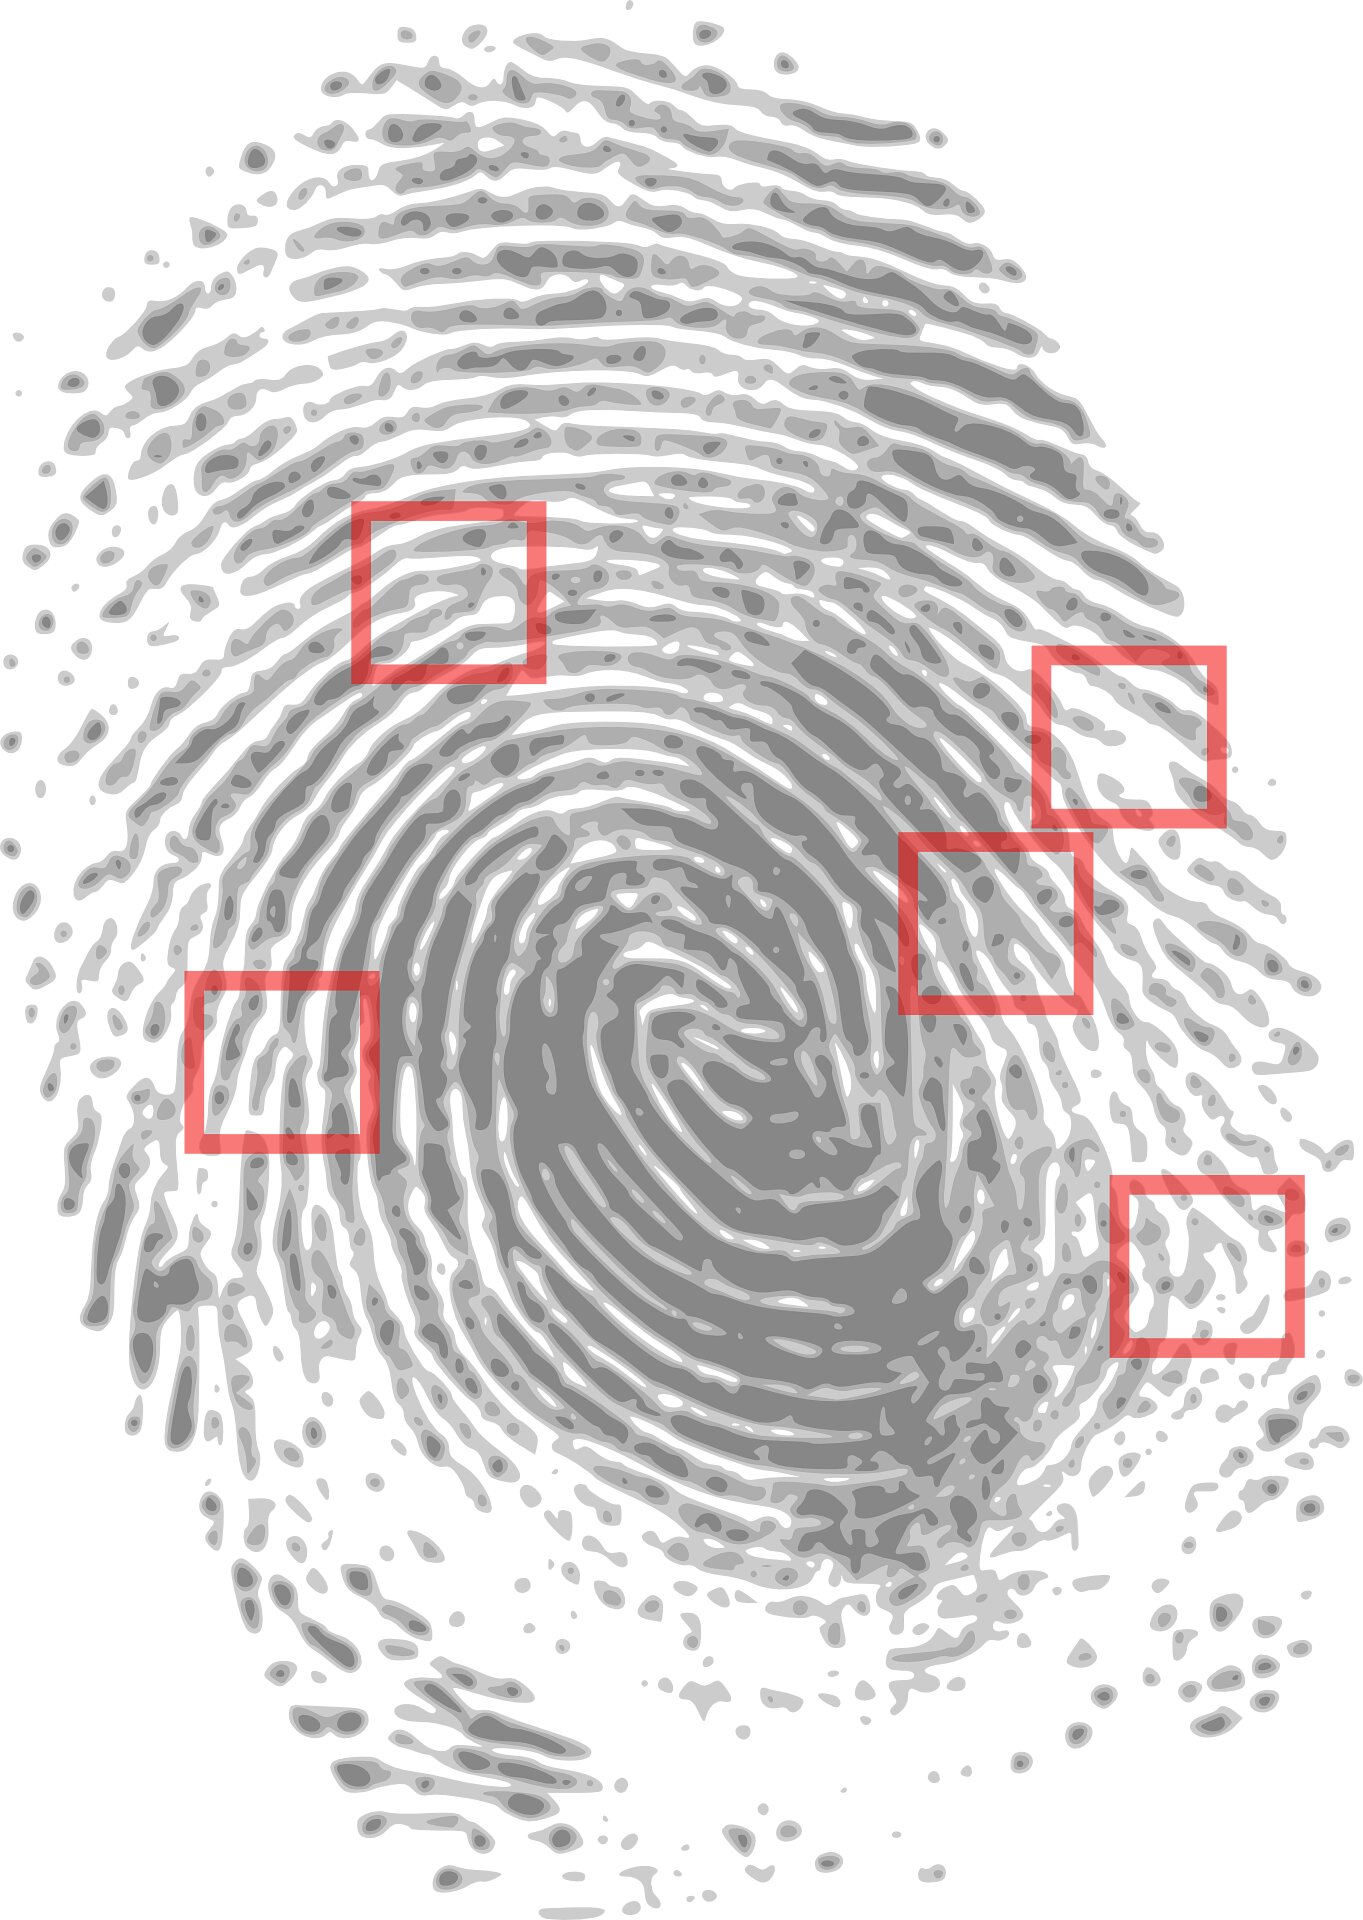 How old is that fingerprint?